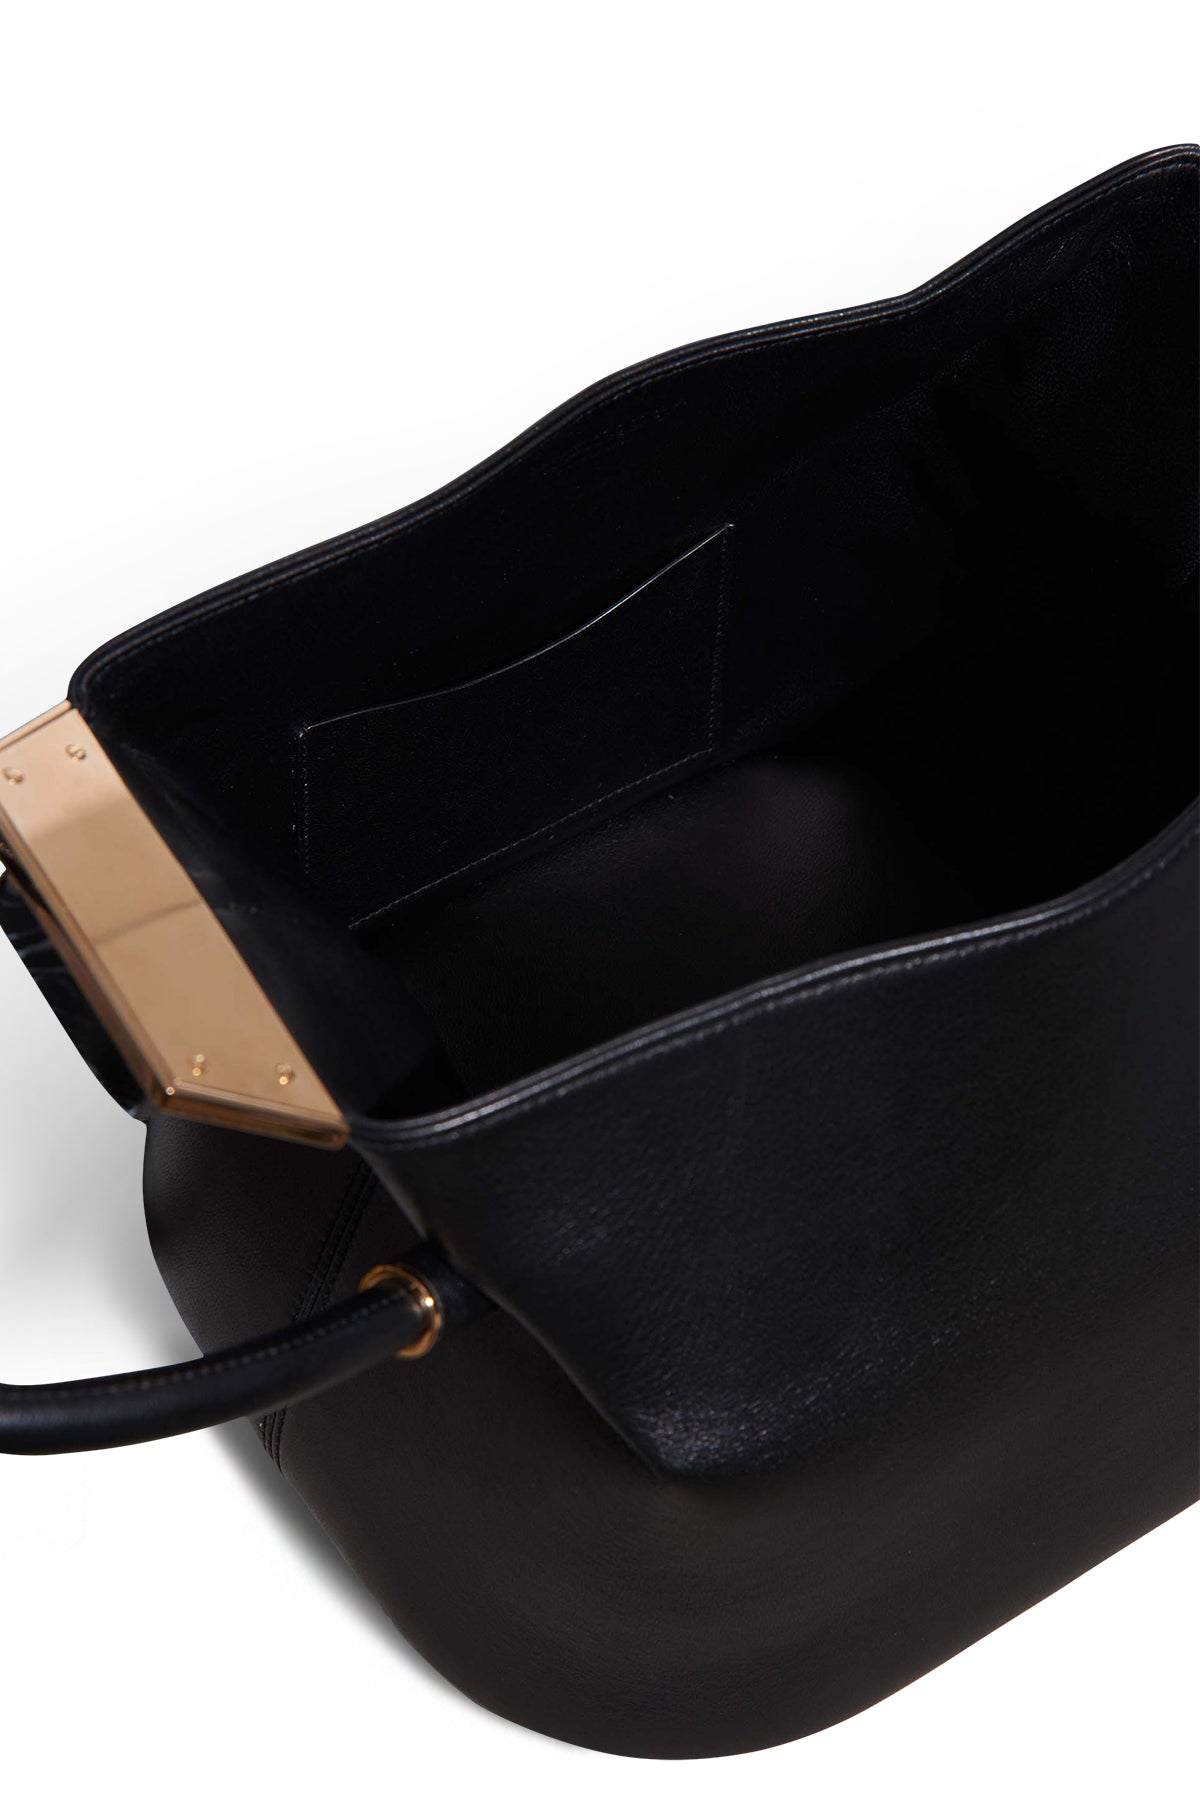 Baez Bag in Black Leather